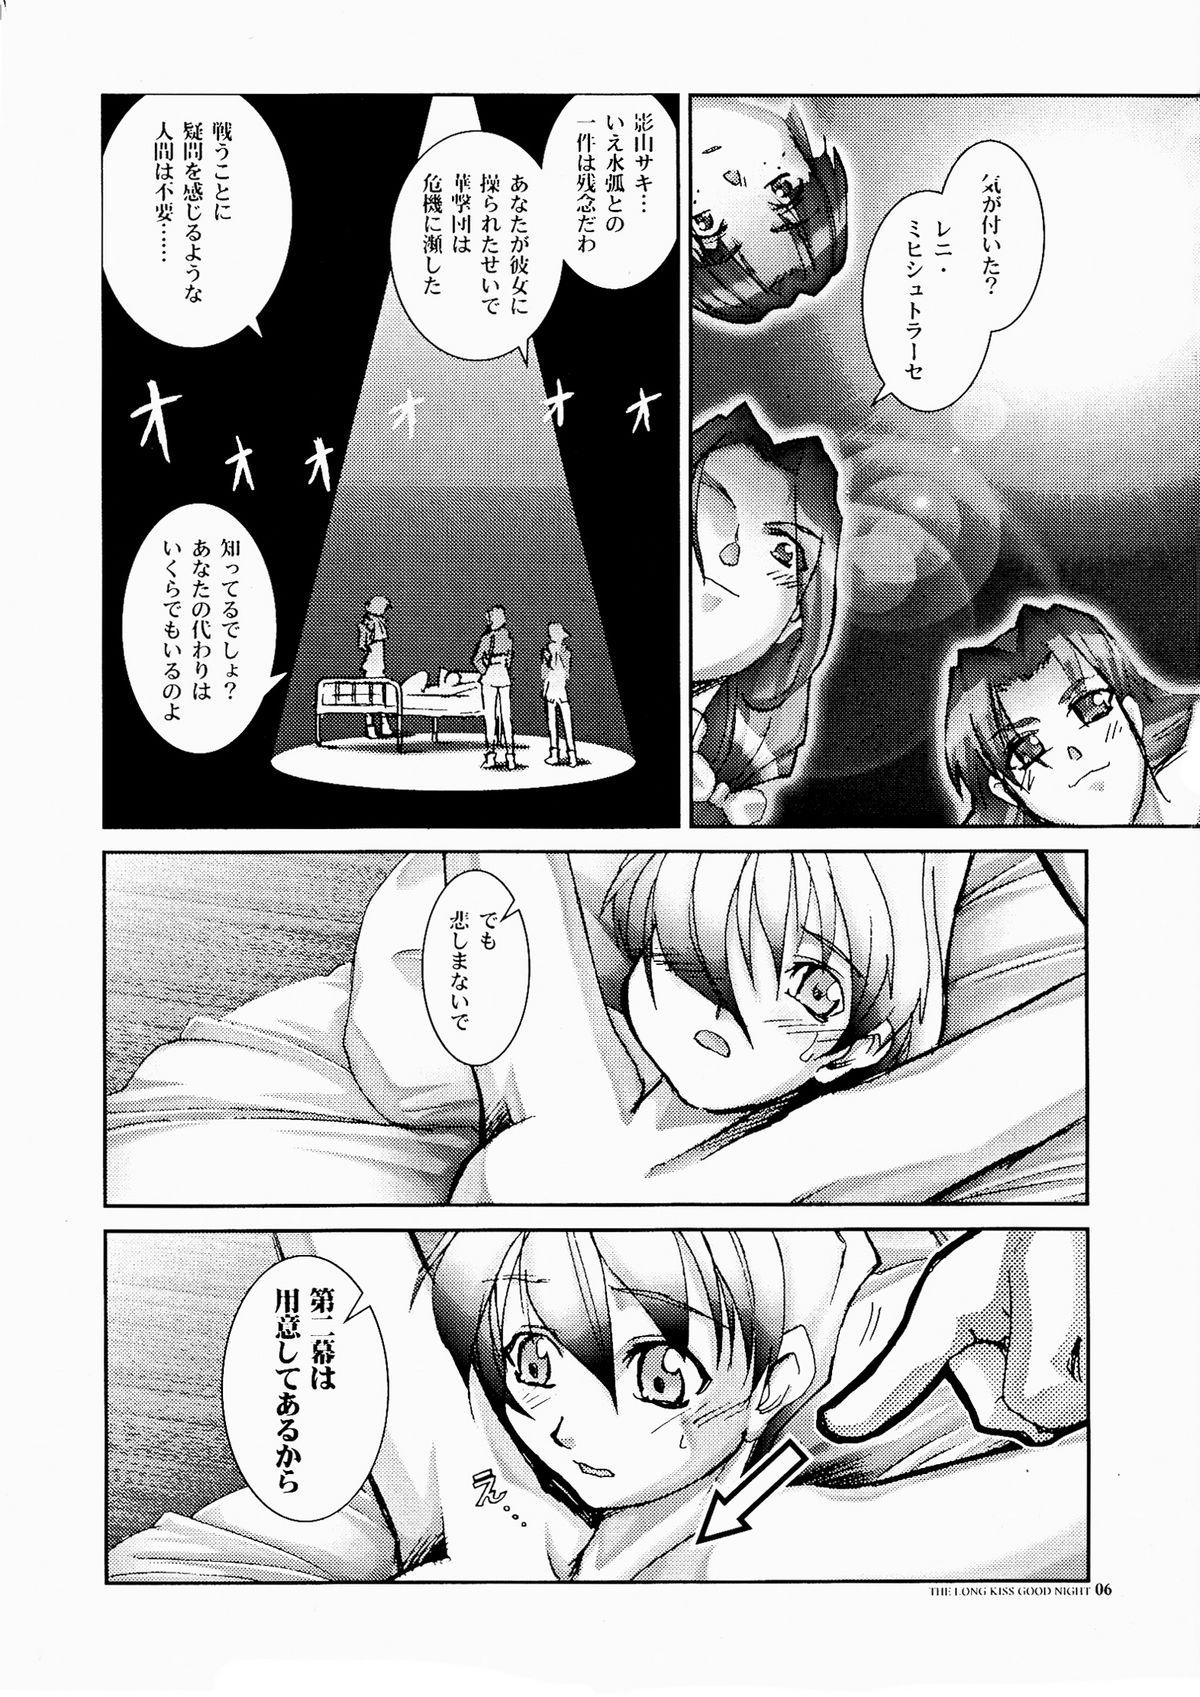 Camshow PG #06 - THE LONG KISS GOOD NIGHT - Sakura taisen Amature Sex - Page 6